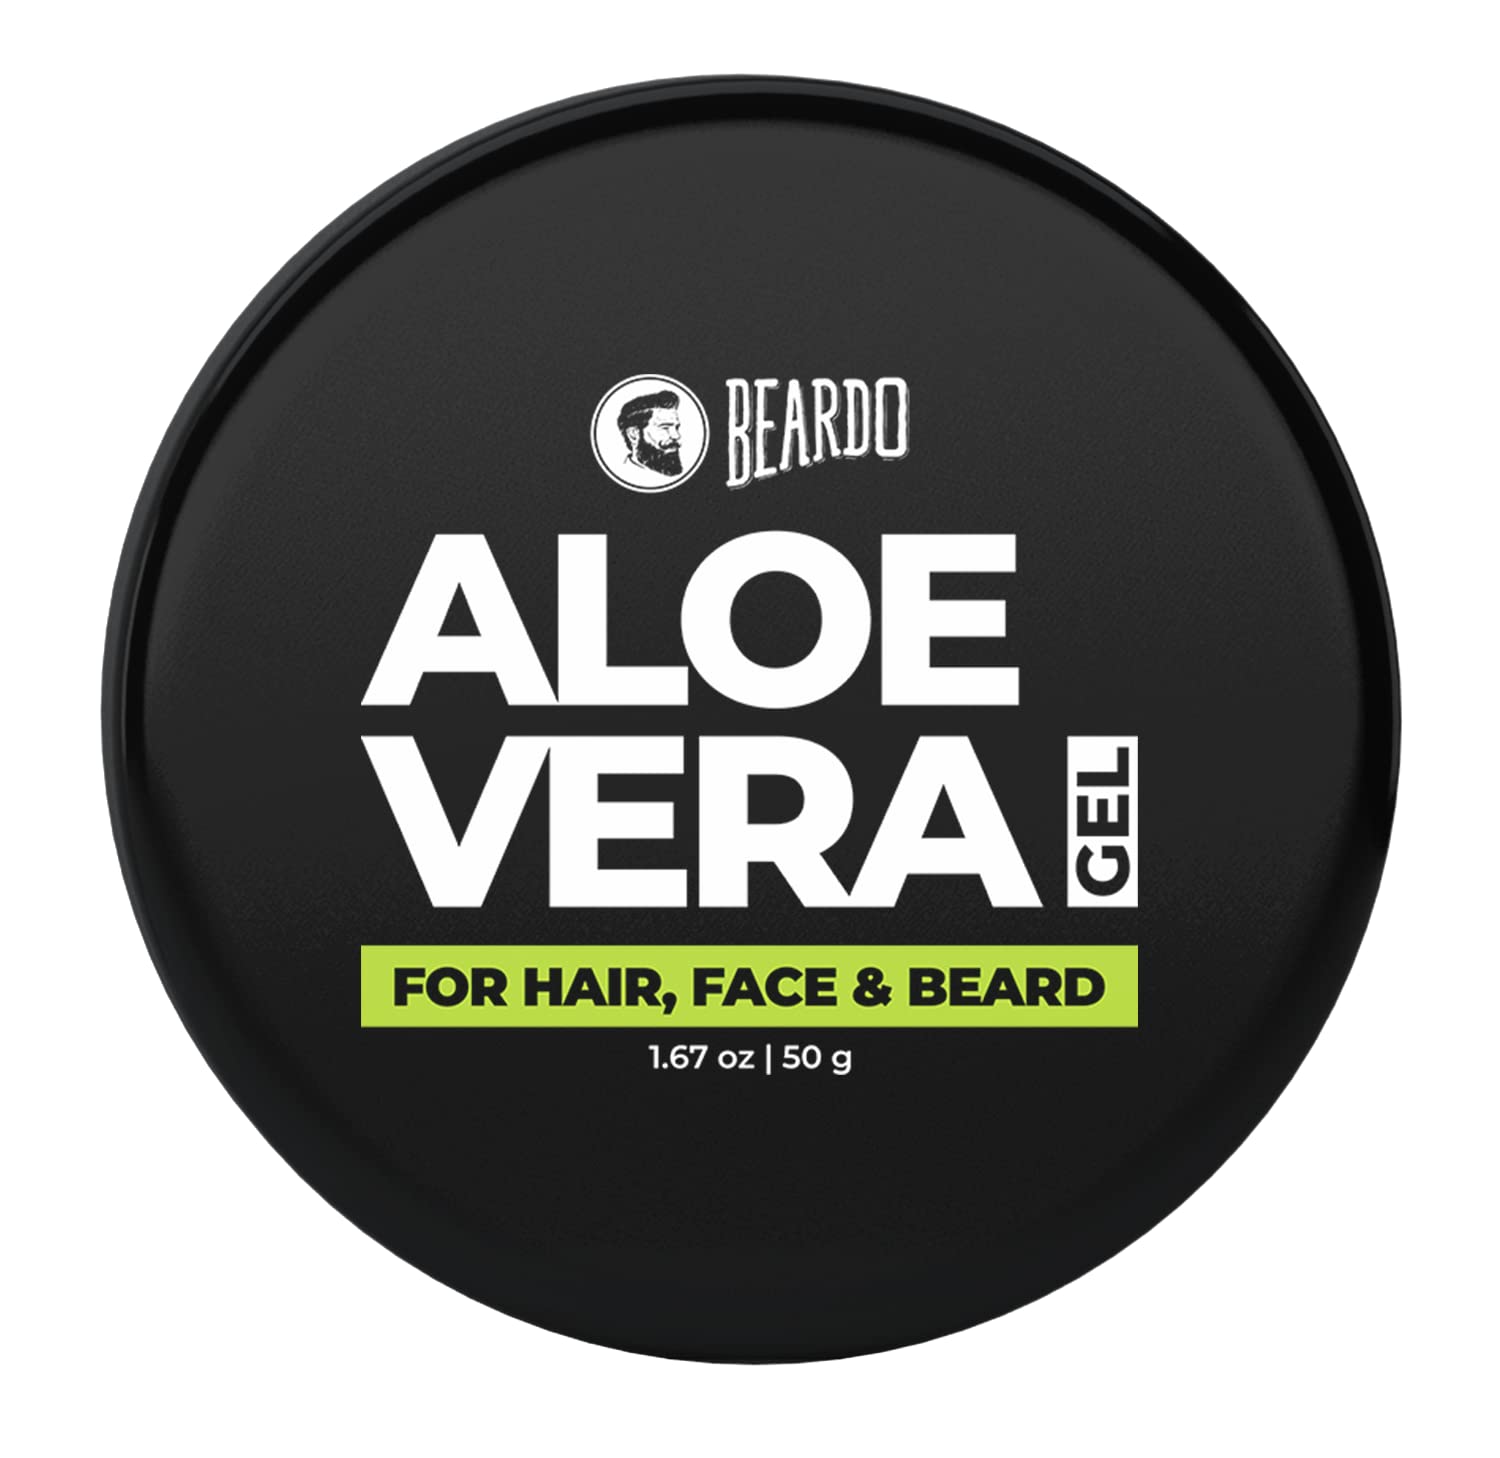 Beardo Aloe Vera Gel For Hair, Face & Beard l Sunburn Relief - Skin Care - 1.76 Oz (50g)